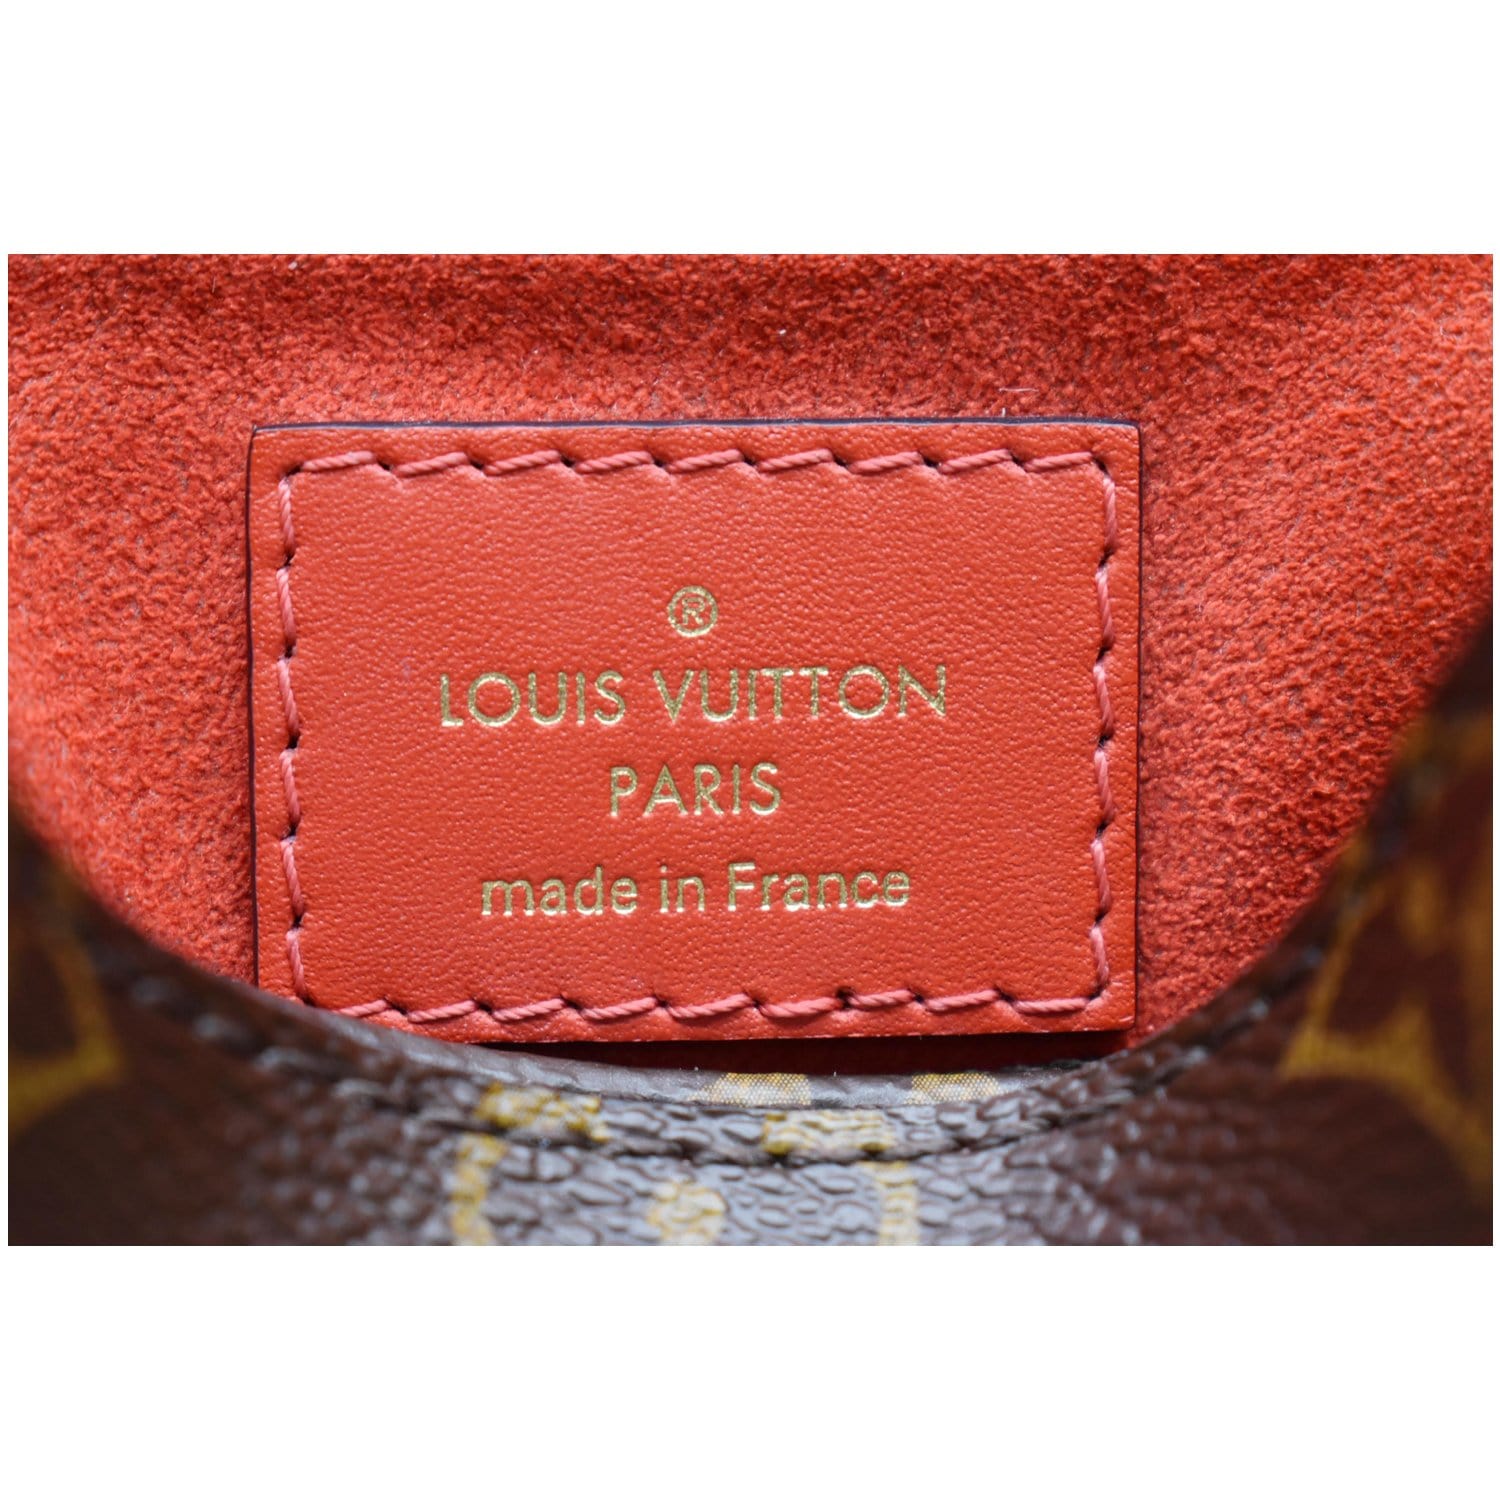 LOUIS VUITTON Flower Monogram Canvas Tote Bag Red - 10% OFF